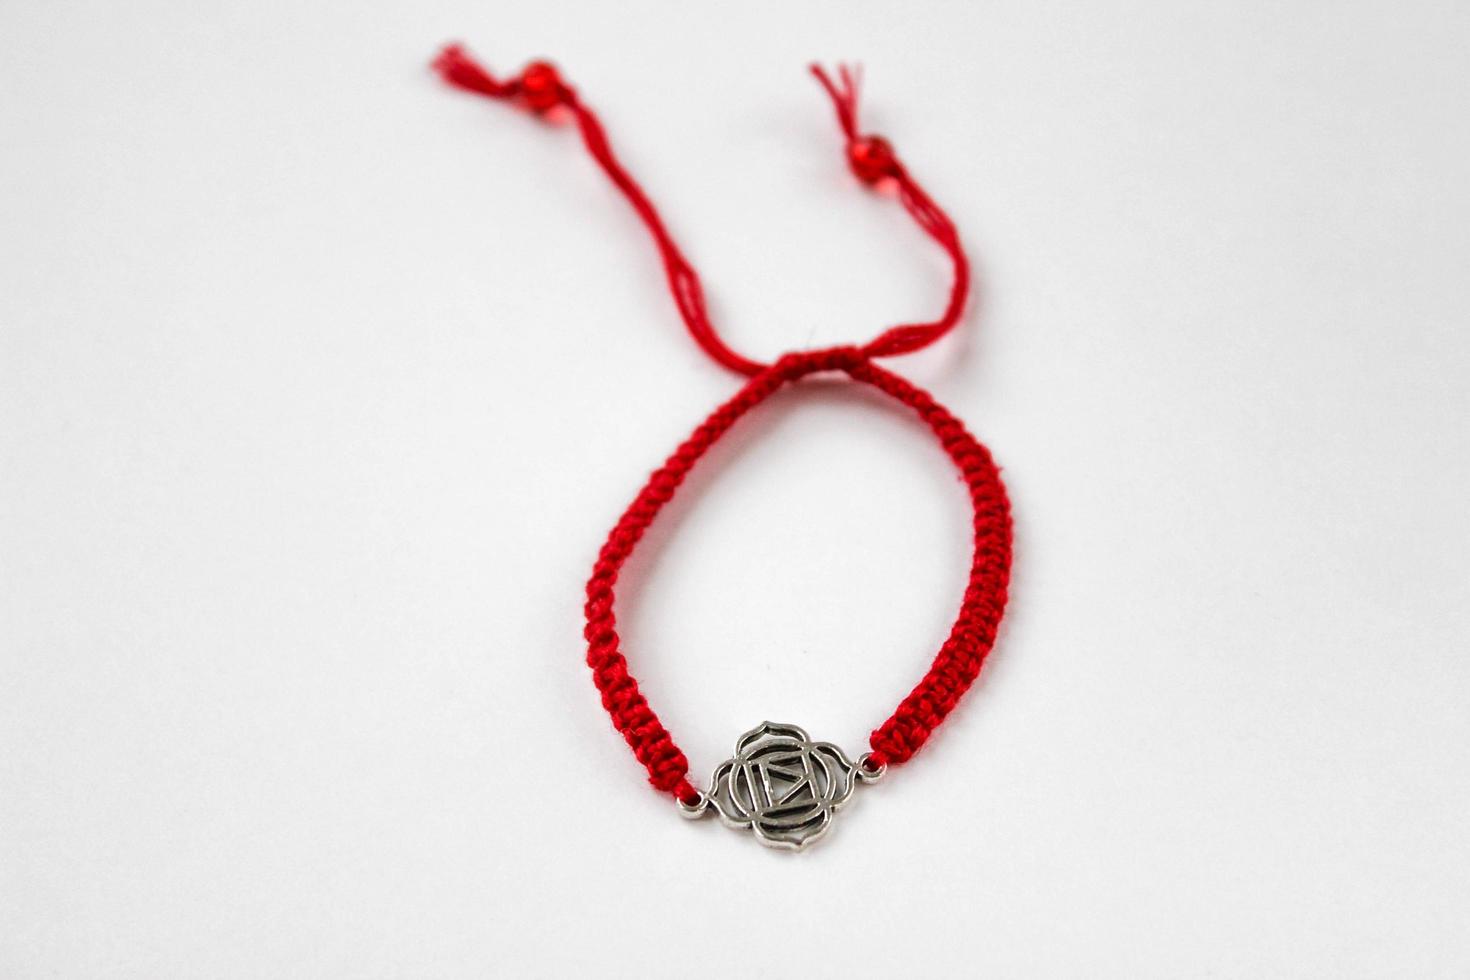 Bracelet tressé rouge avec chakra muladhara sur fond blanc photo